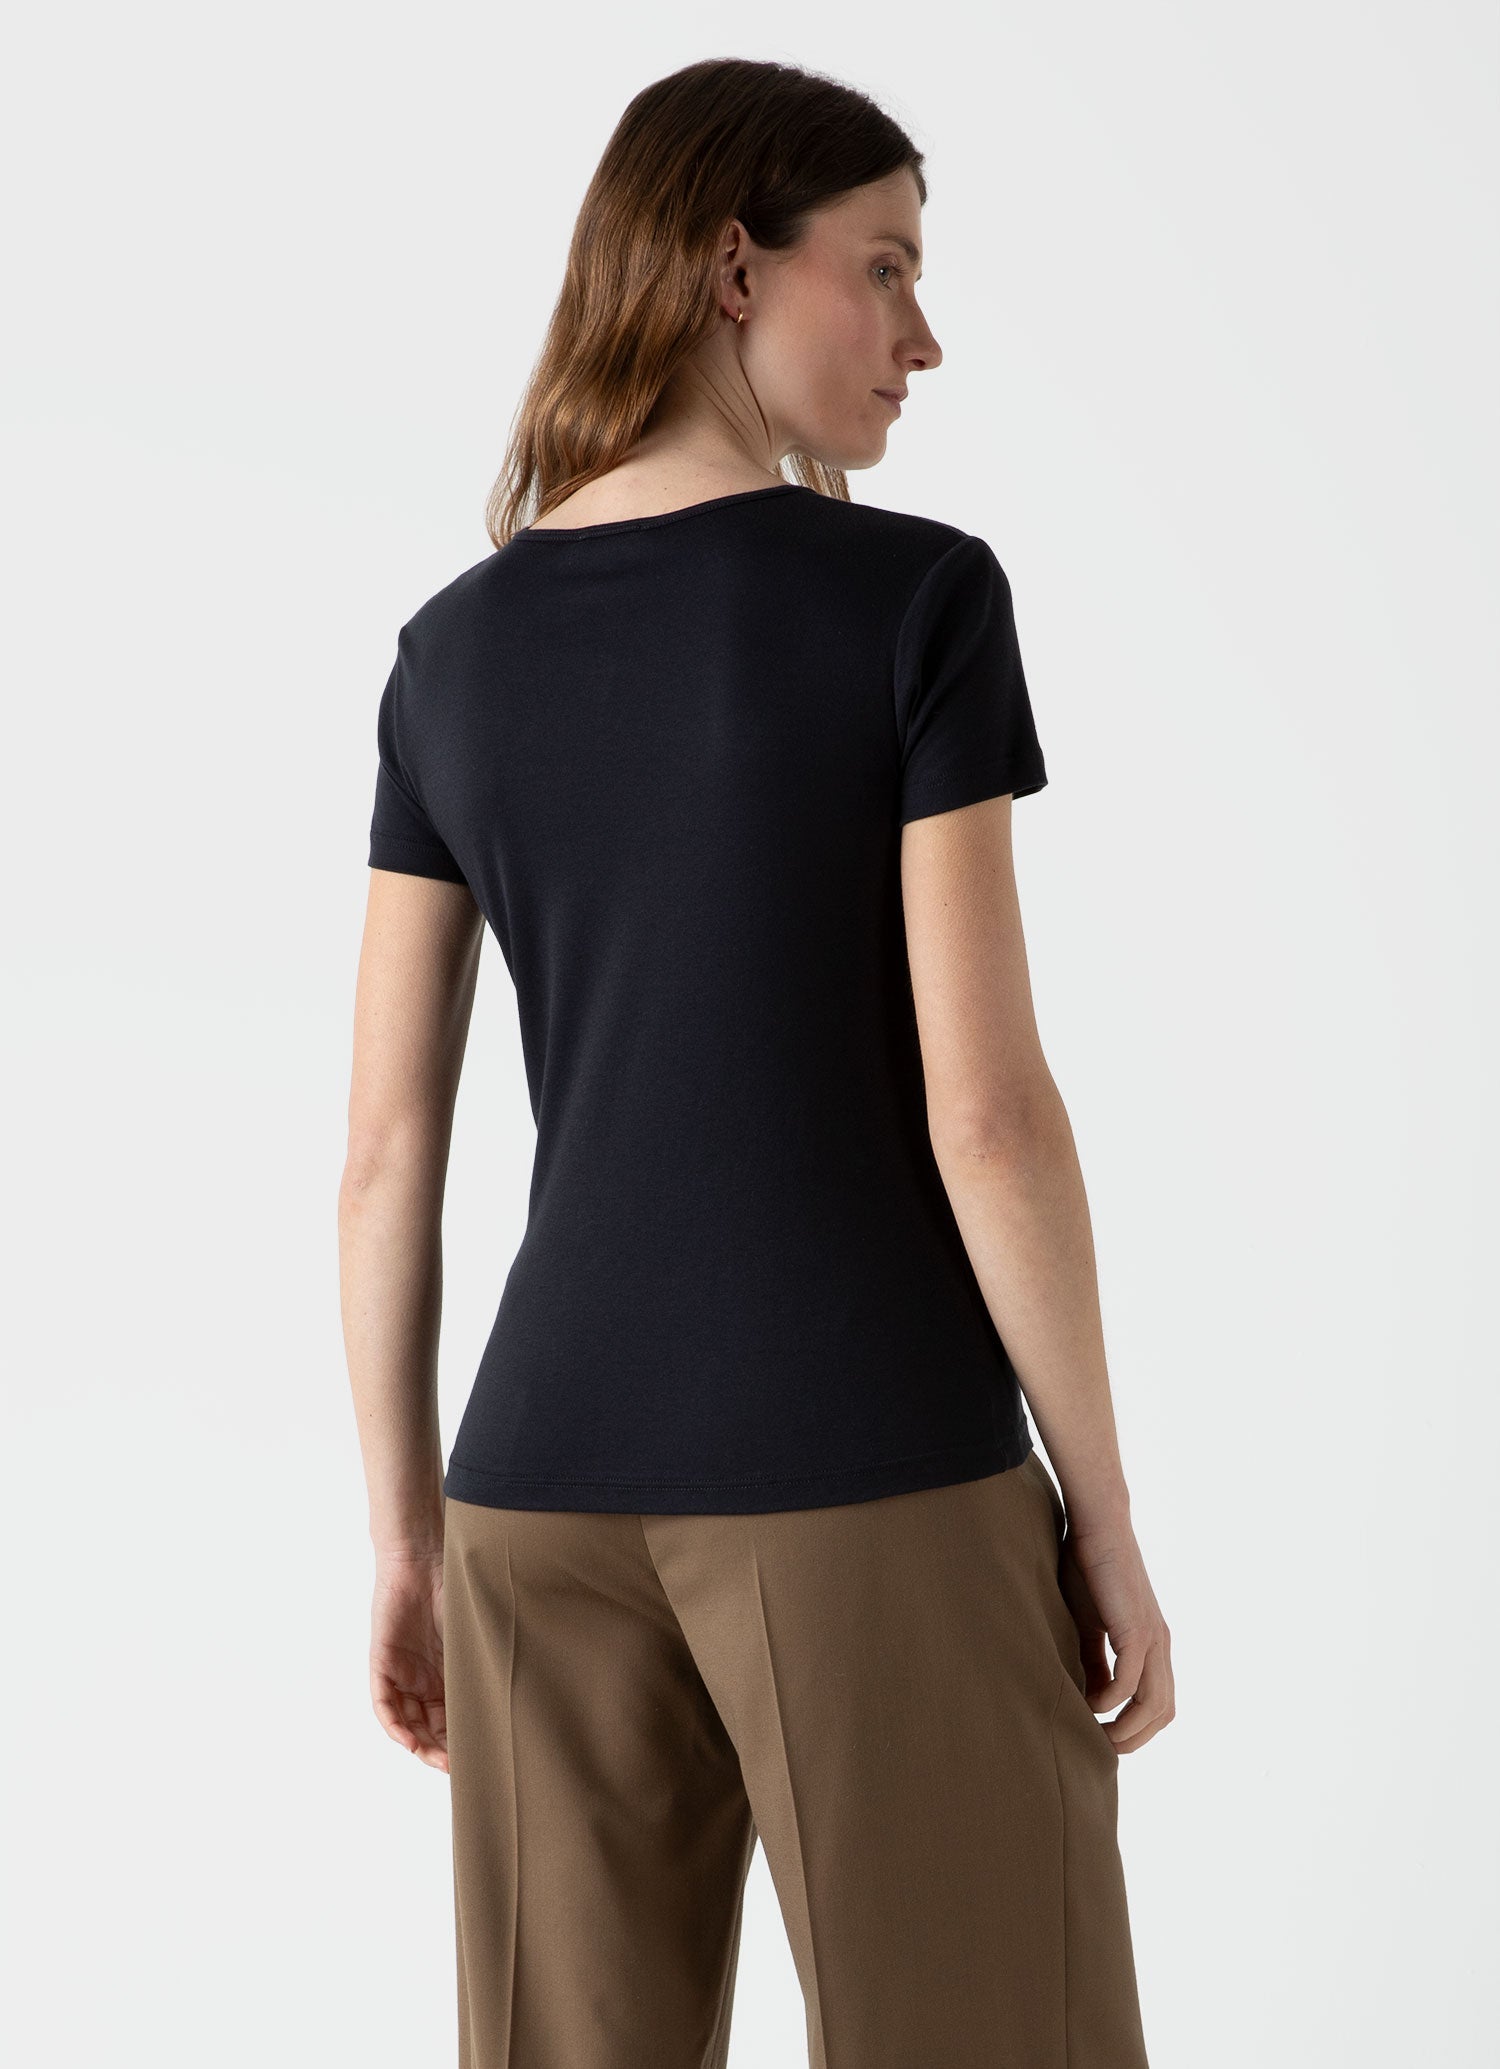 Women's Sea Island Cotton T-shirt in Black